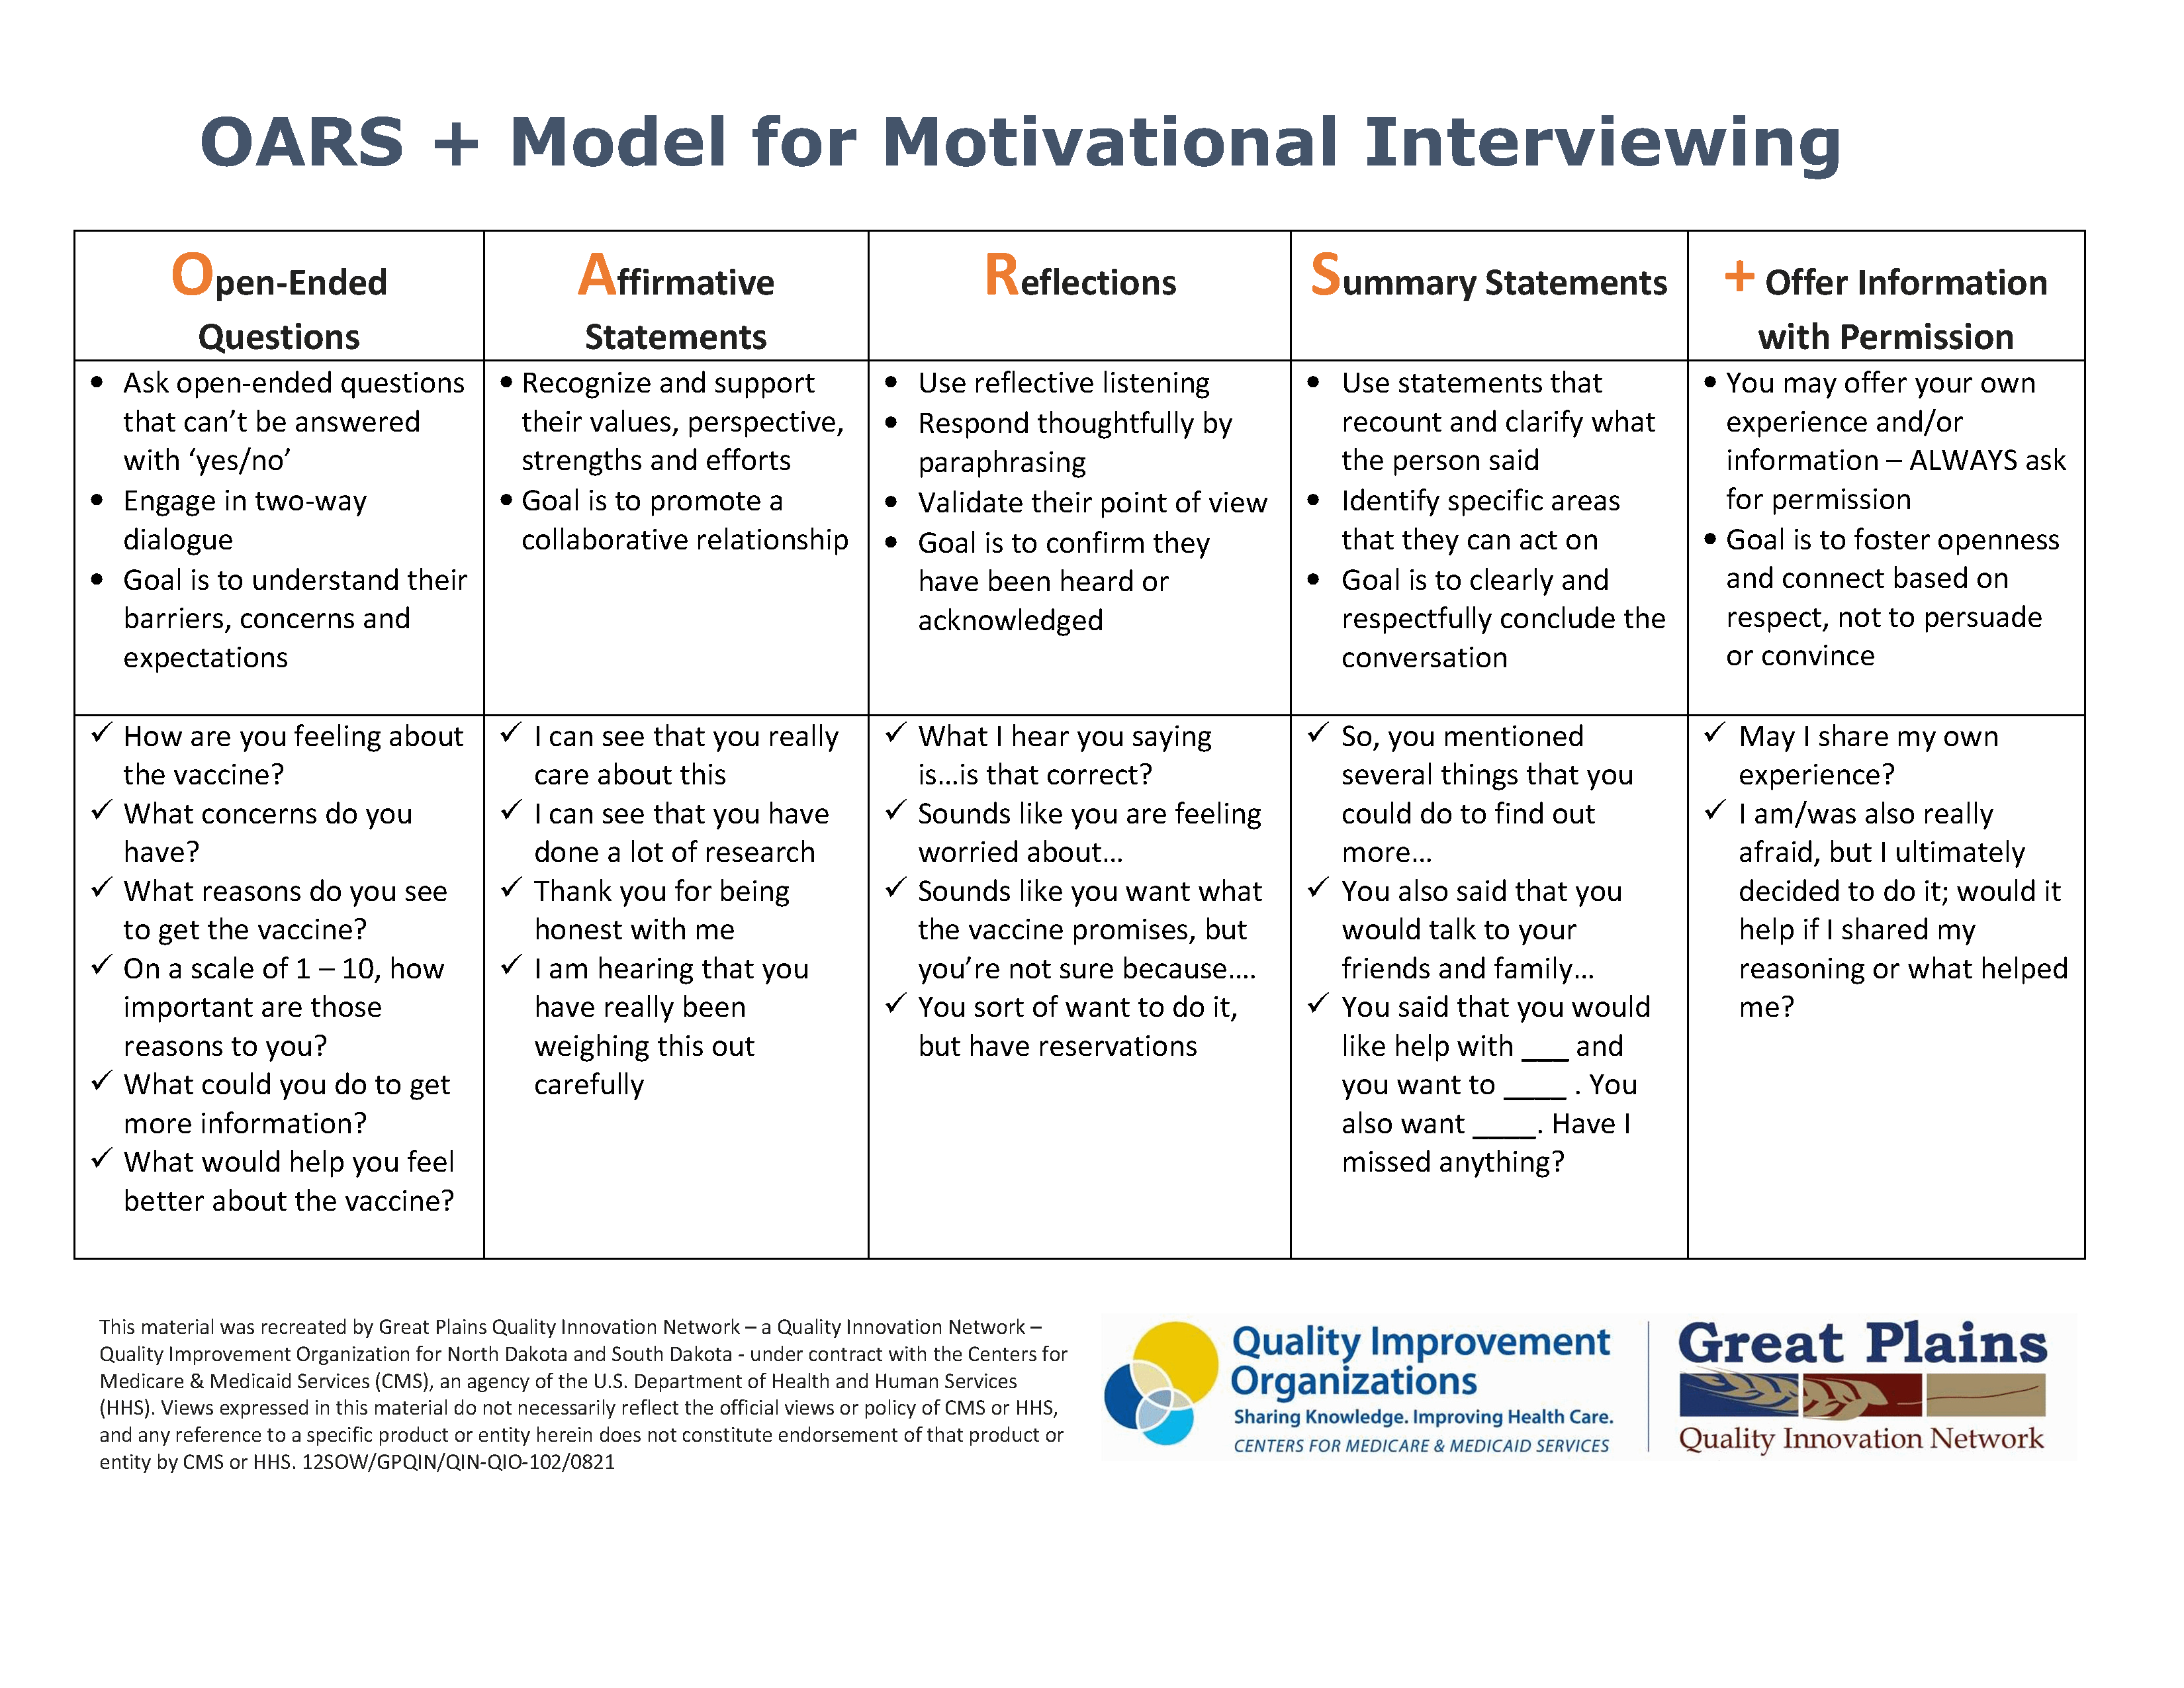 OARS + Model for Motivational Interviewing Flyer